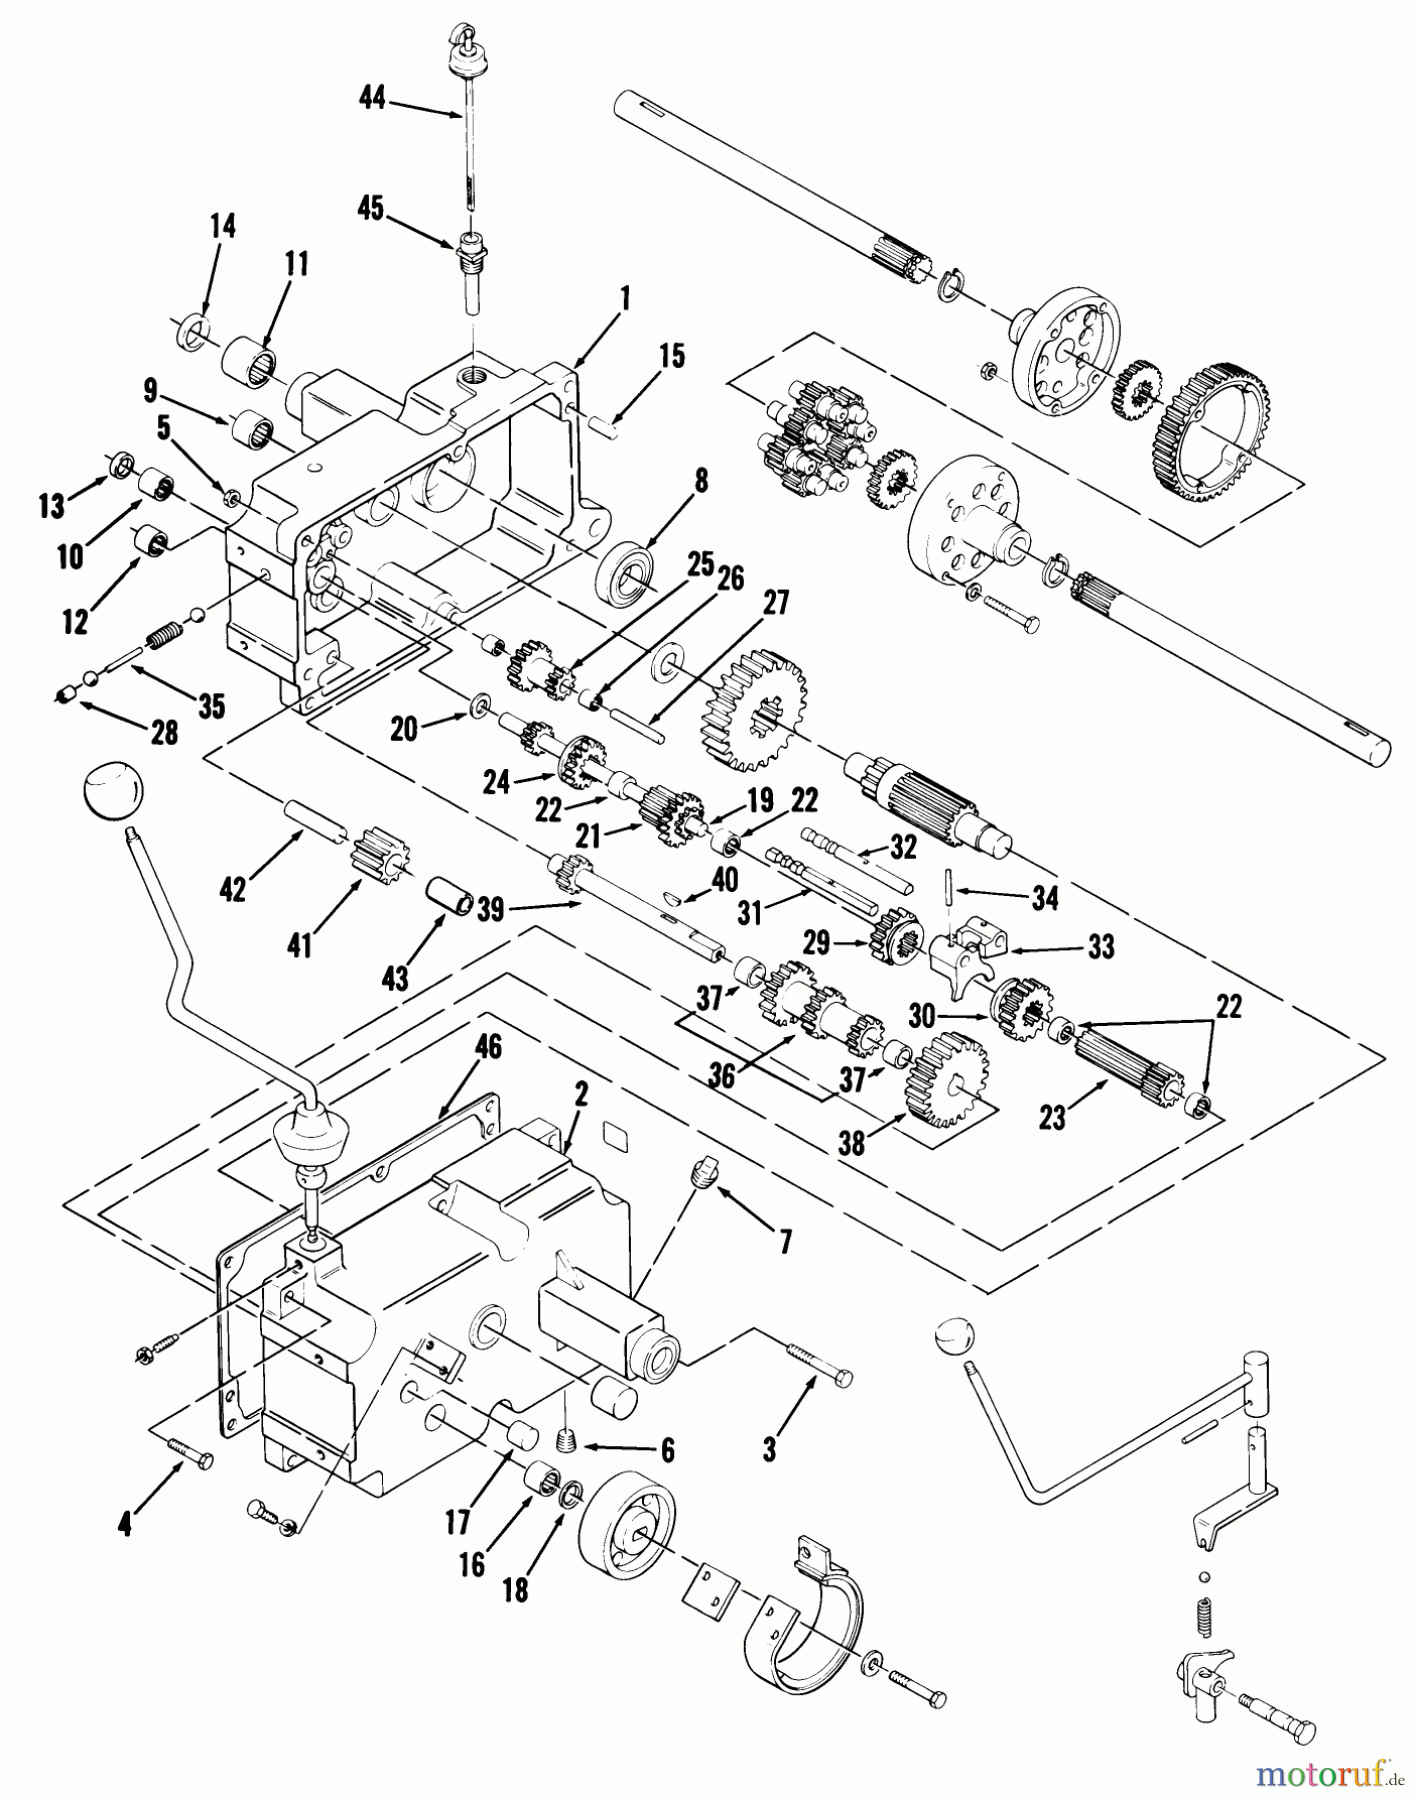  Toro Neu Mowers, Lawn & Garden Tractor Seite 1 01-14KE02 (C-145) - Toro C-145 Automatic Tractor, 1981 MECHANICAL TRANSMISSION-8 SPEED #1